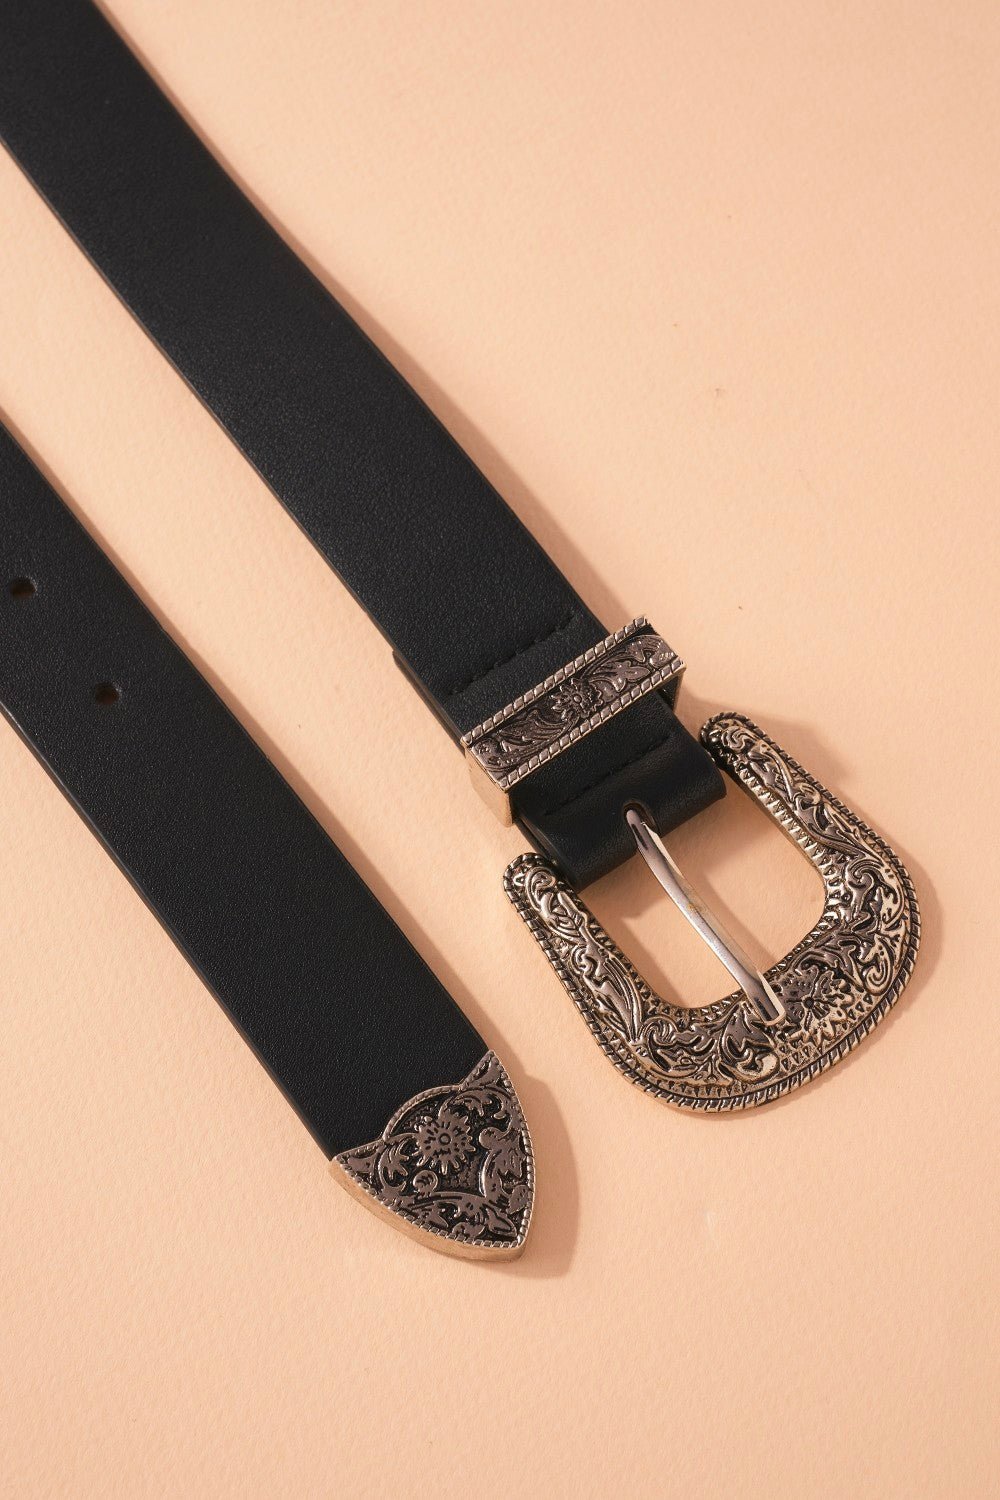 Western Buckle Faux Leather Belt - Belts - The Green Brick Boutique